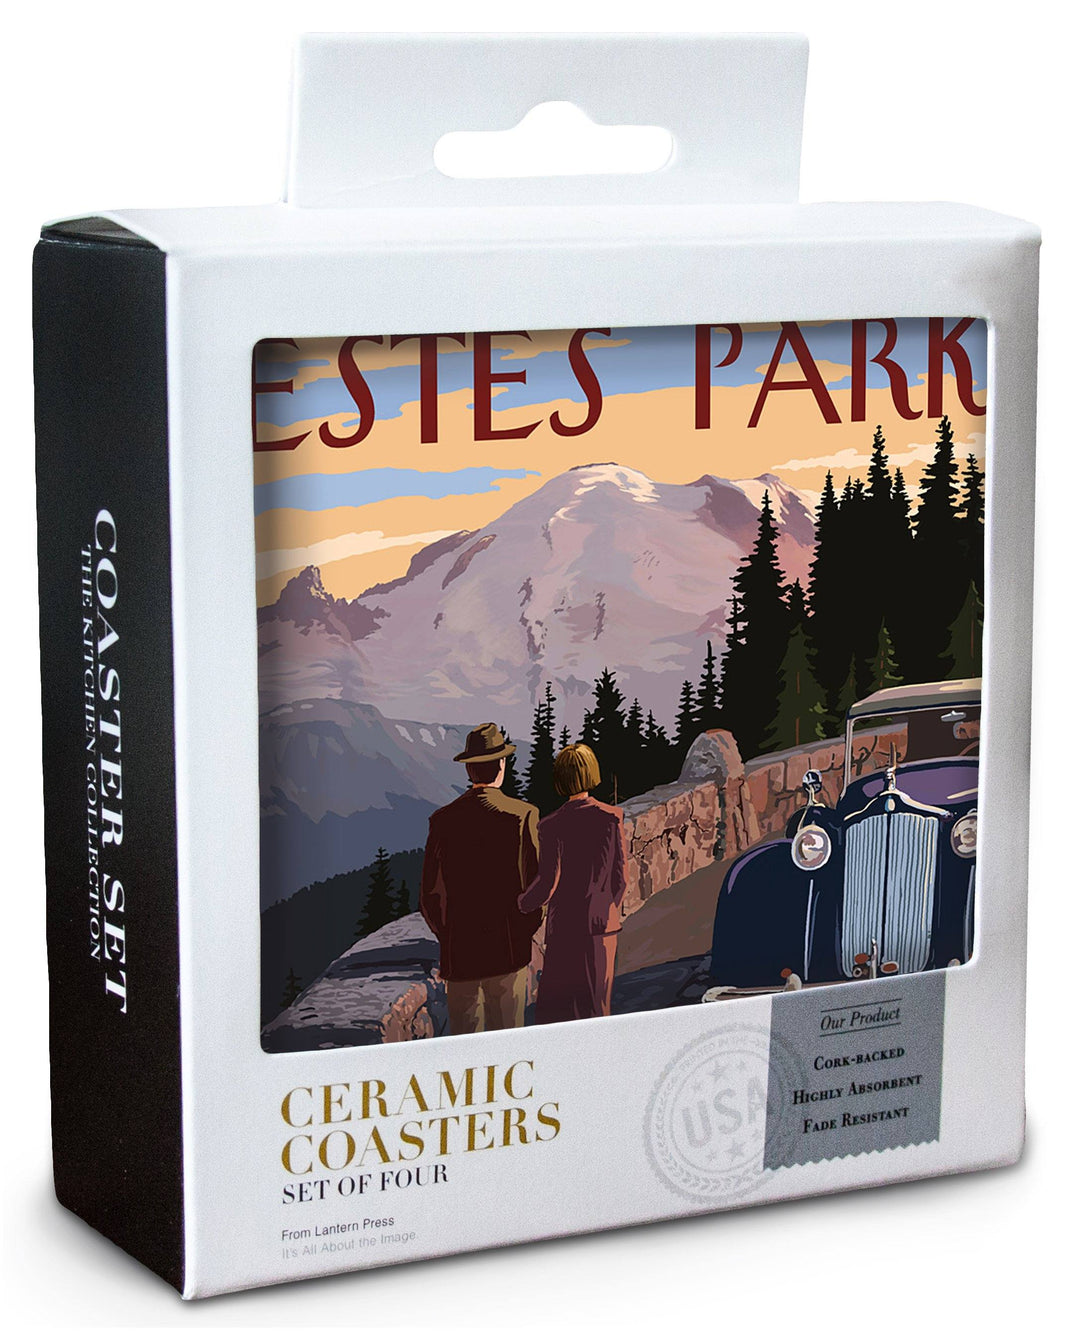 Estes Park, Colorado, The Mountains are Calling, Lantern Press Artwork, Coaster Set Coasters Lantern Press 